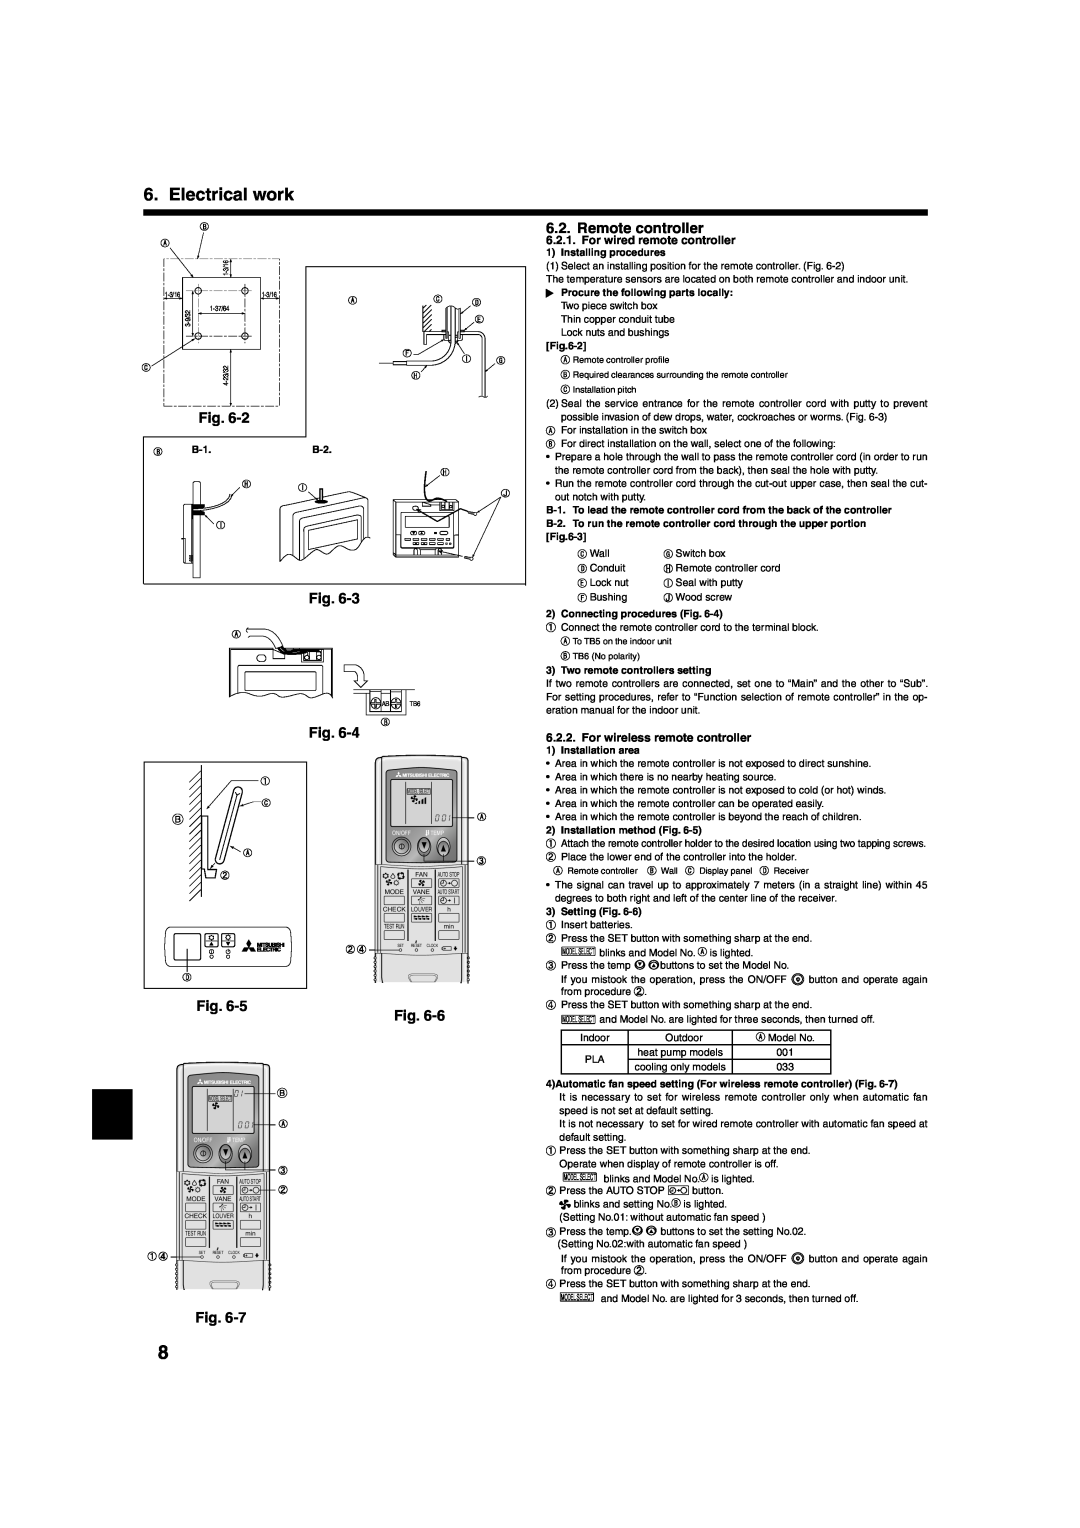 Mitsumi electronic PLA-ABA Remote controller, Electrical work, For wired remote controller, For wireless remote controller 